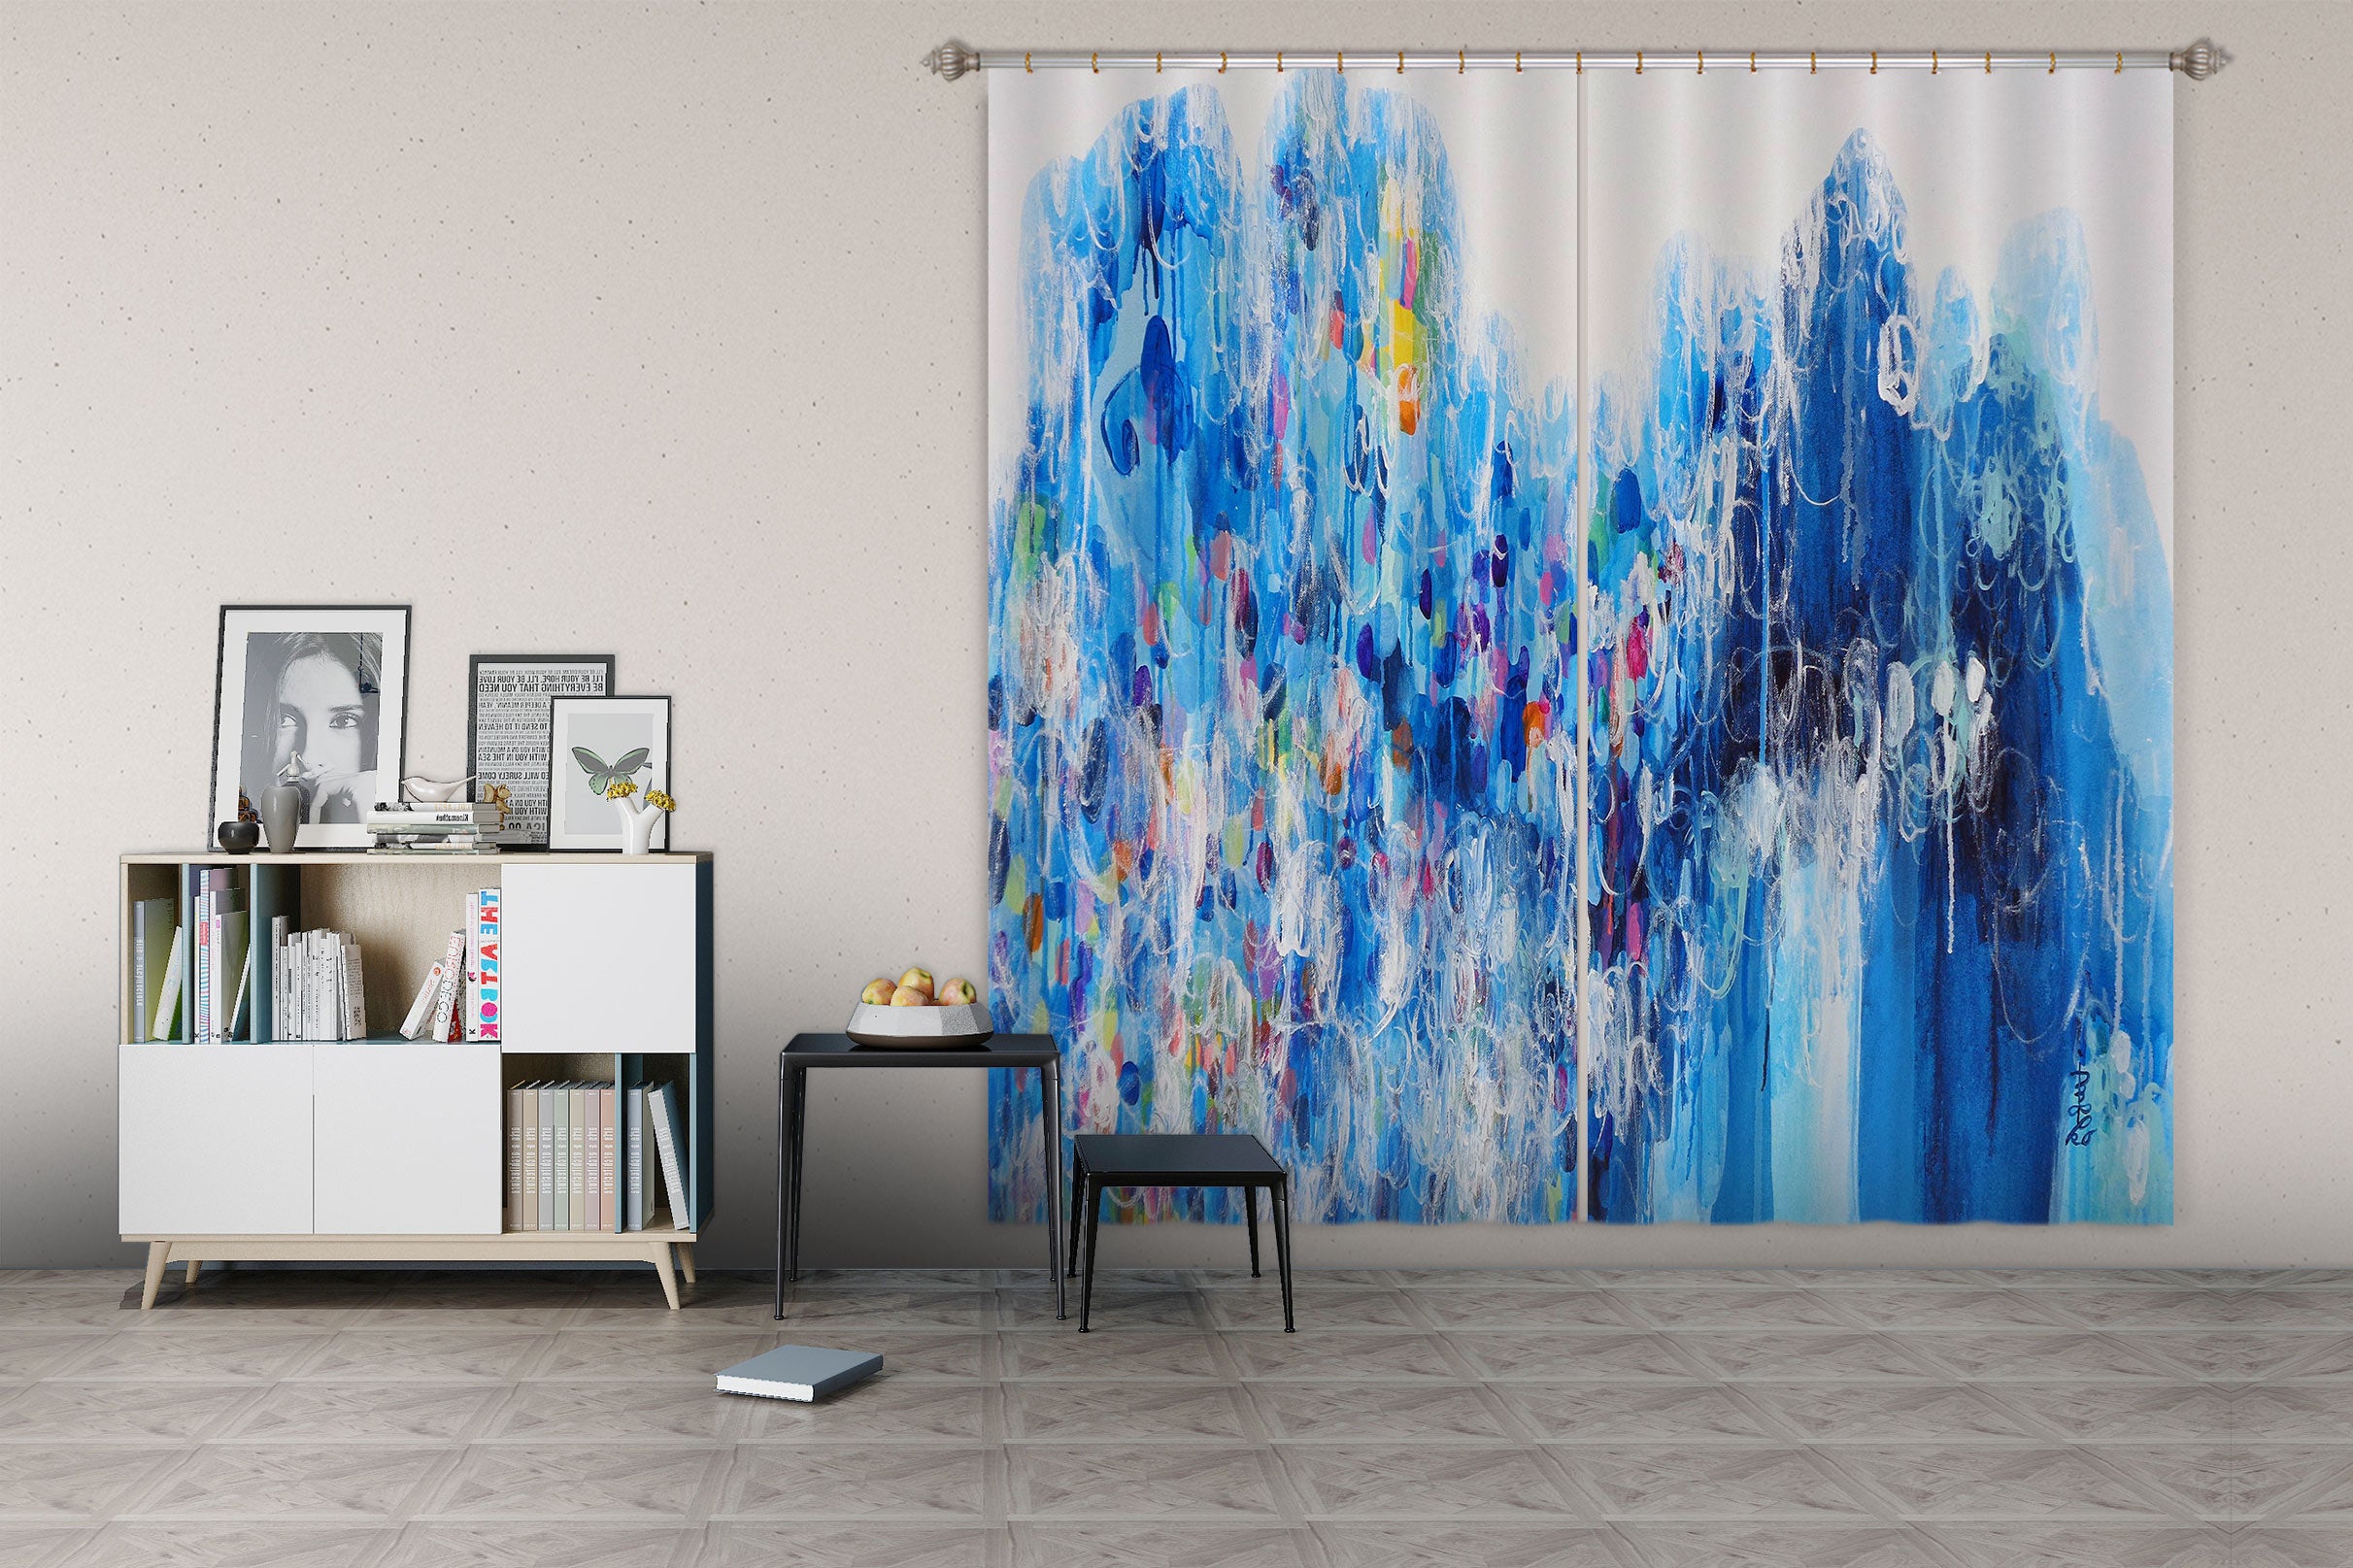 3D Blue Art Painting 2318 Misako Chida Curtain Curtains Drapes